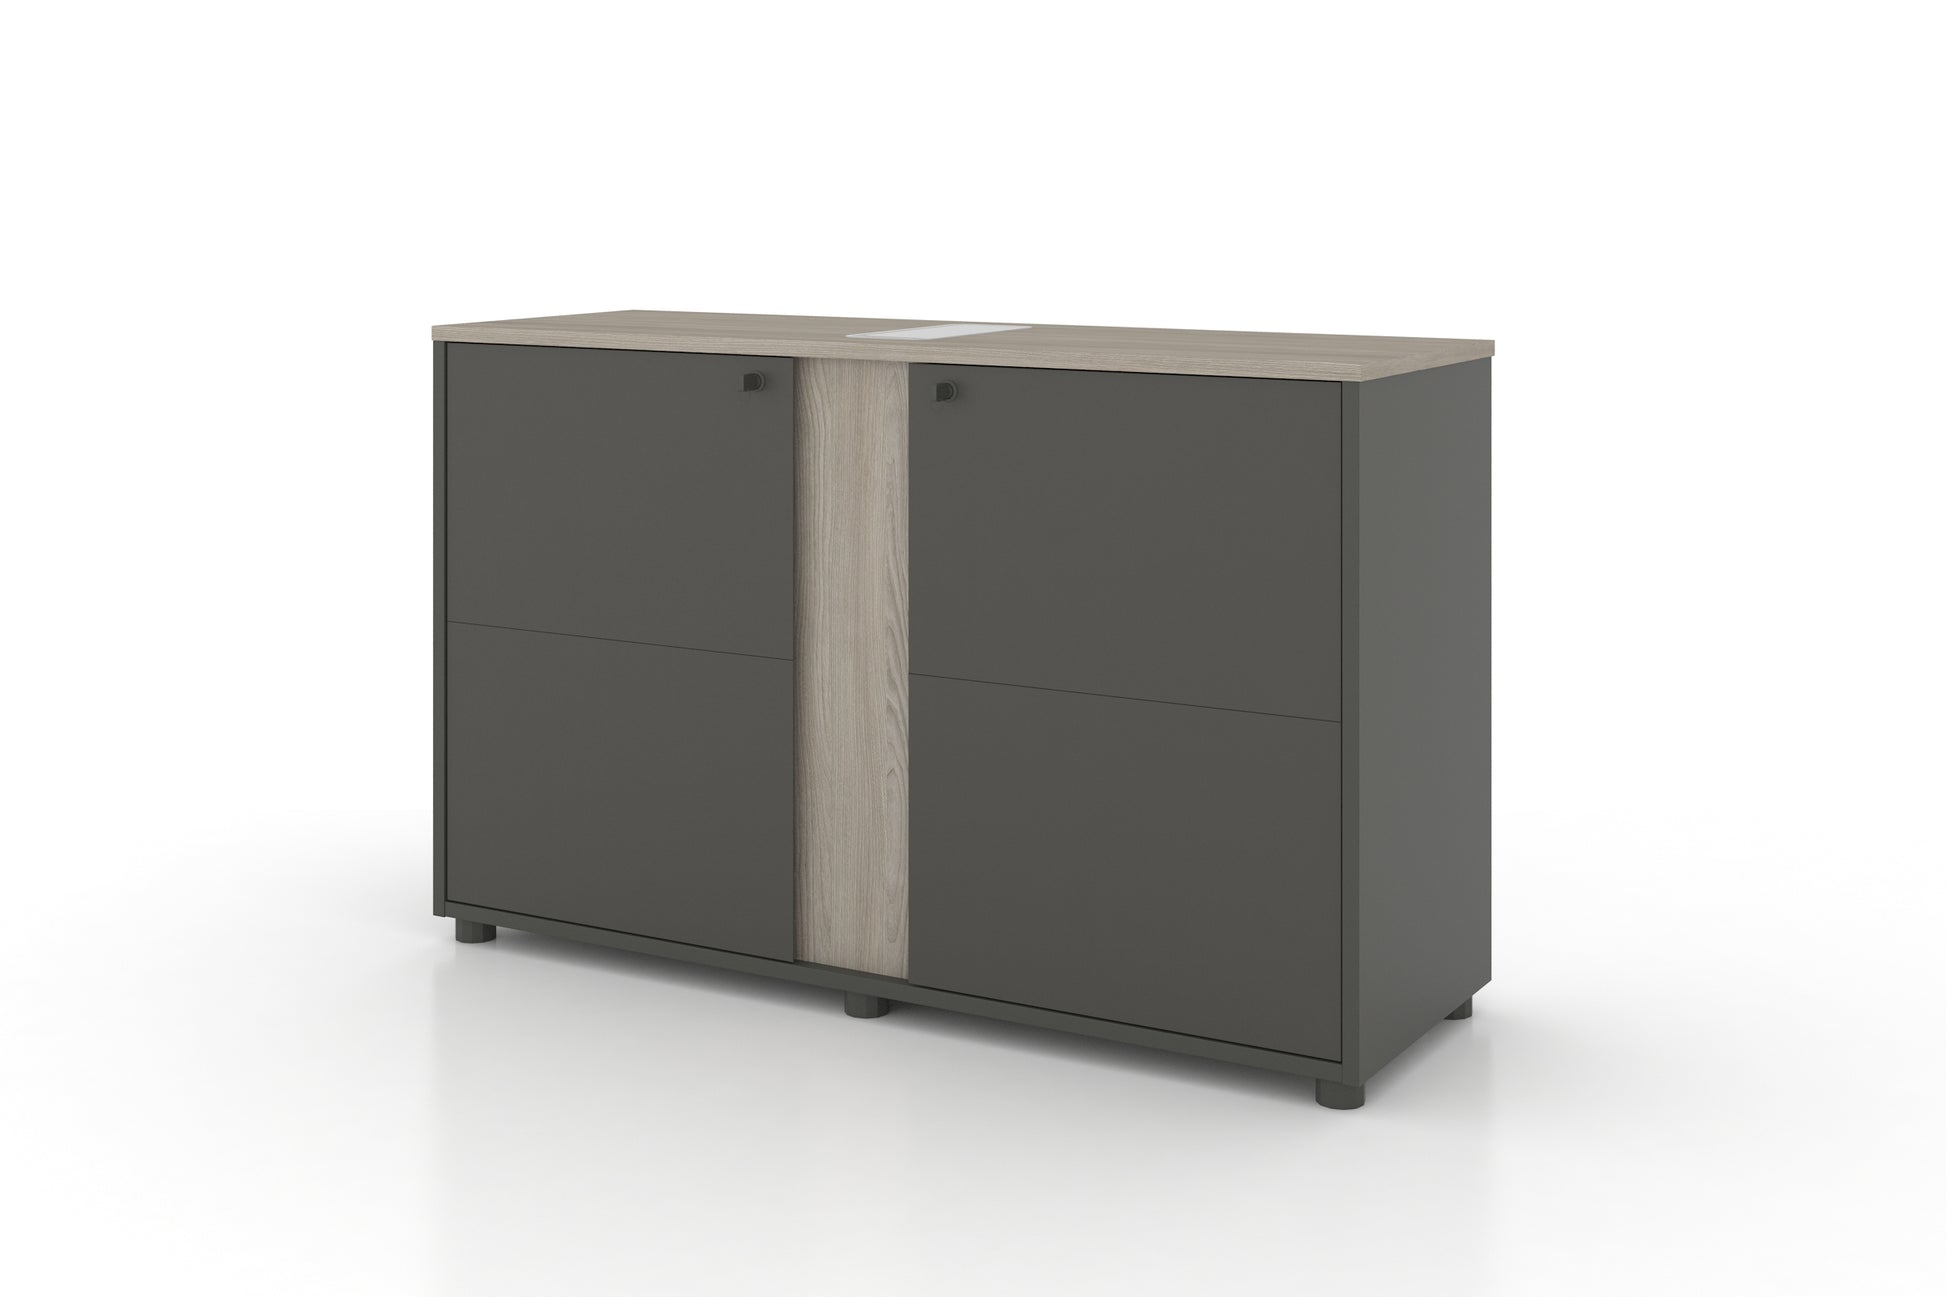 Universal 2-Level Printer Cabinet (Meteor Grey Body) - BAFCO